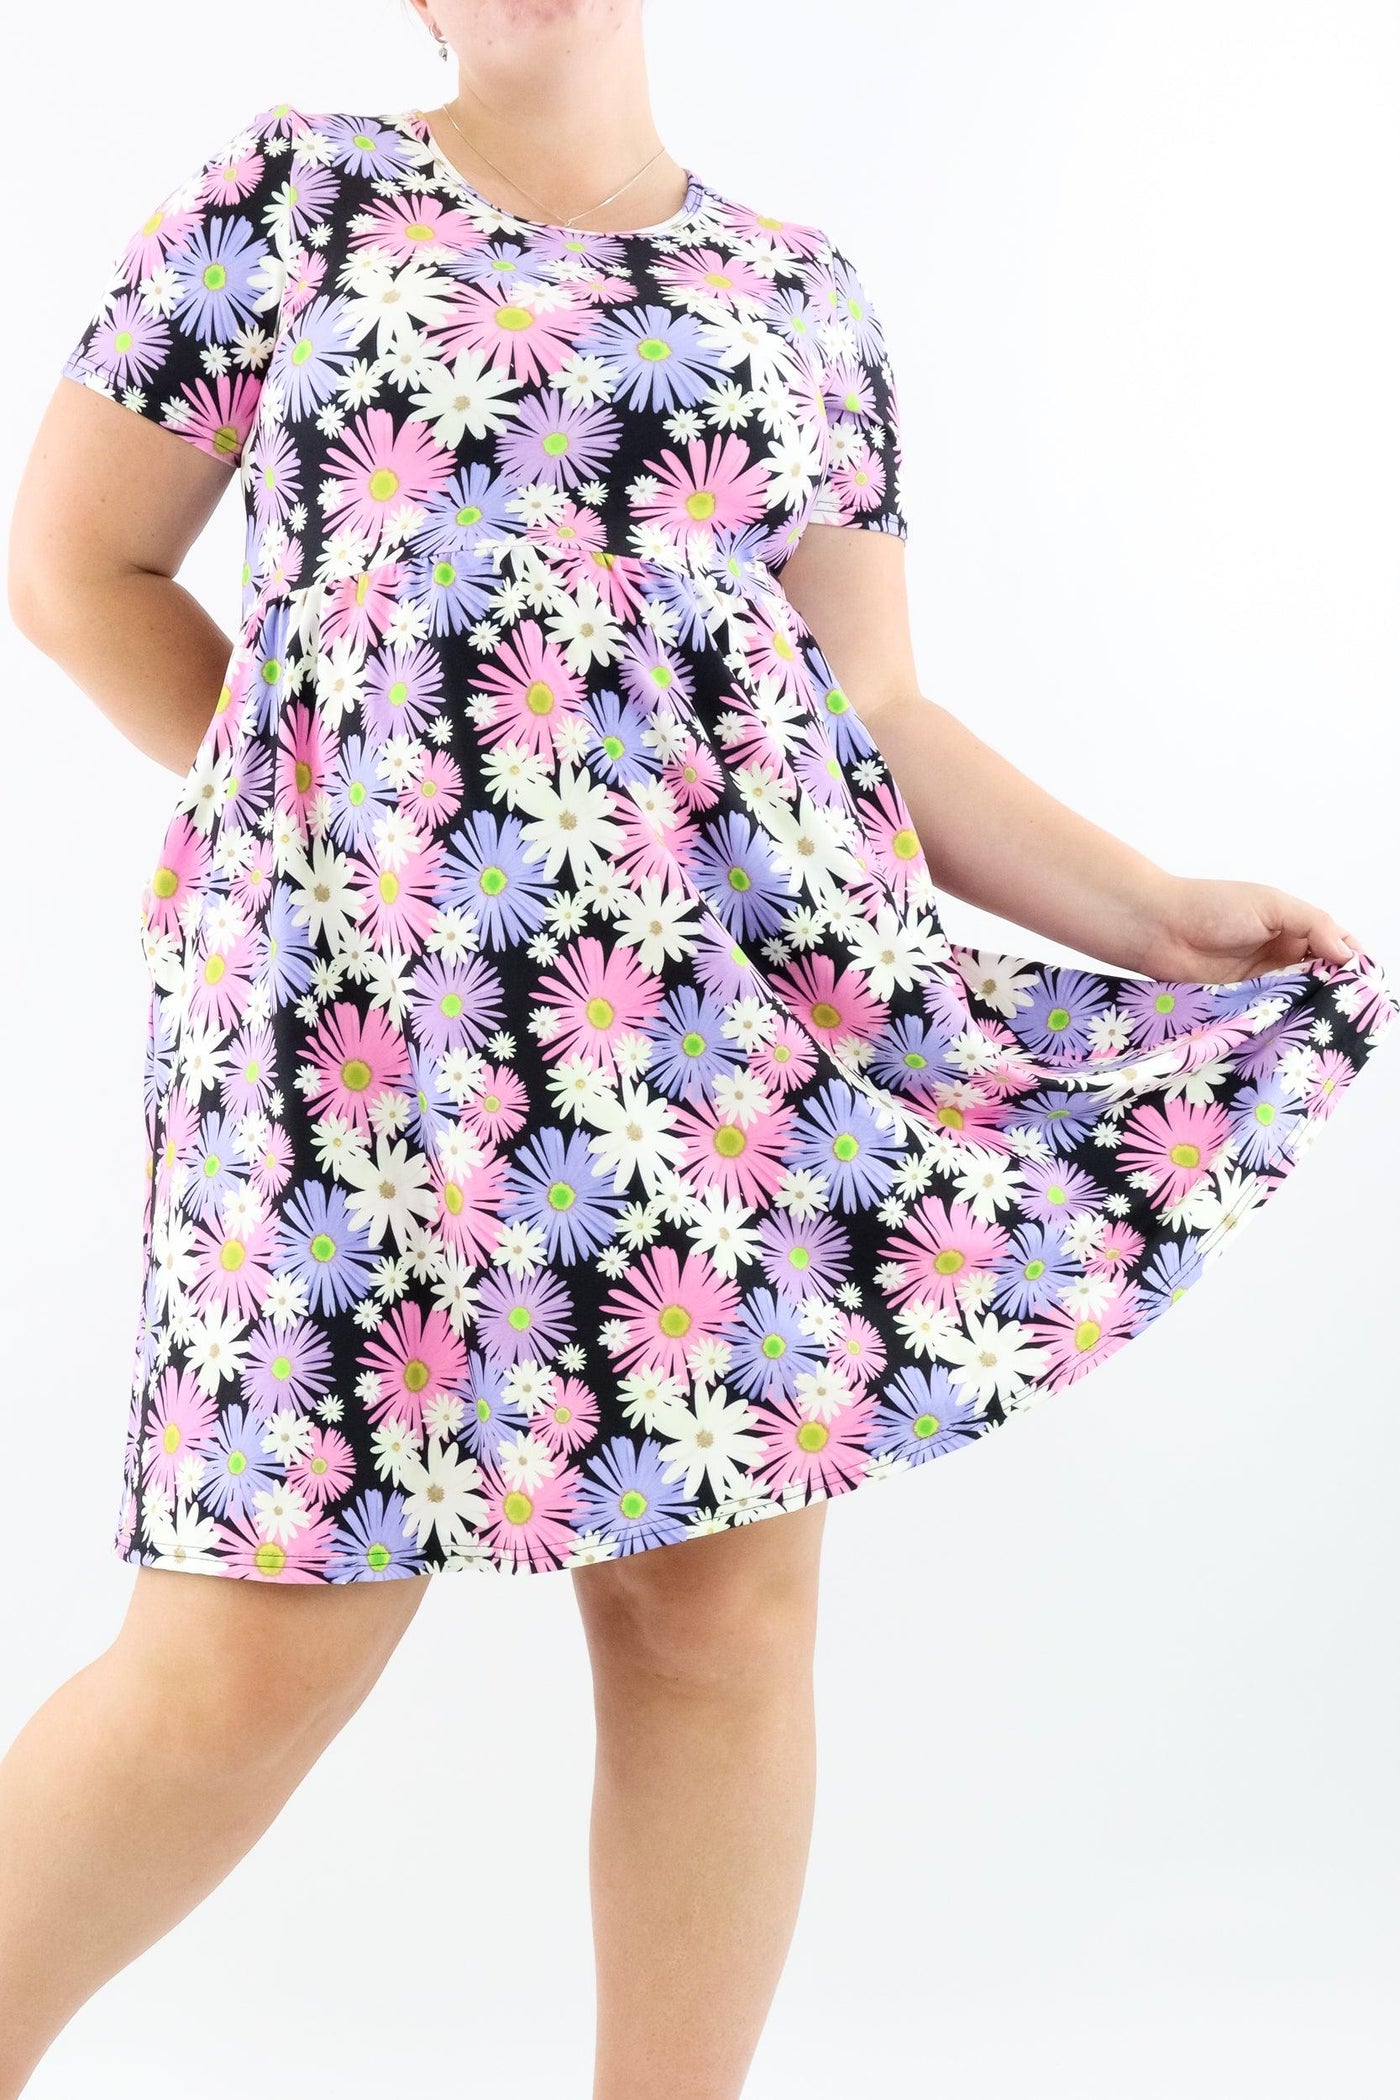 Darling Daisy - Short Sleeve Skater Dress - Knee Length - Side Pockets - Pawlie